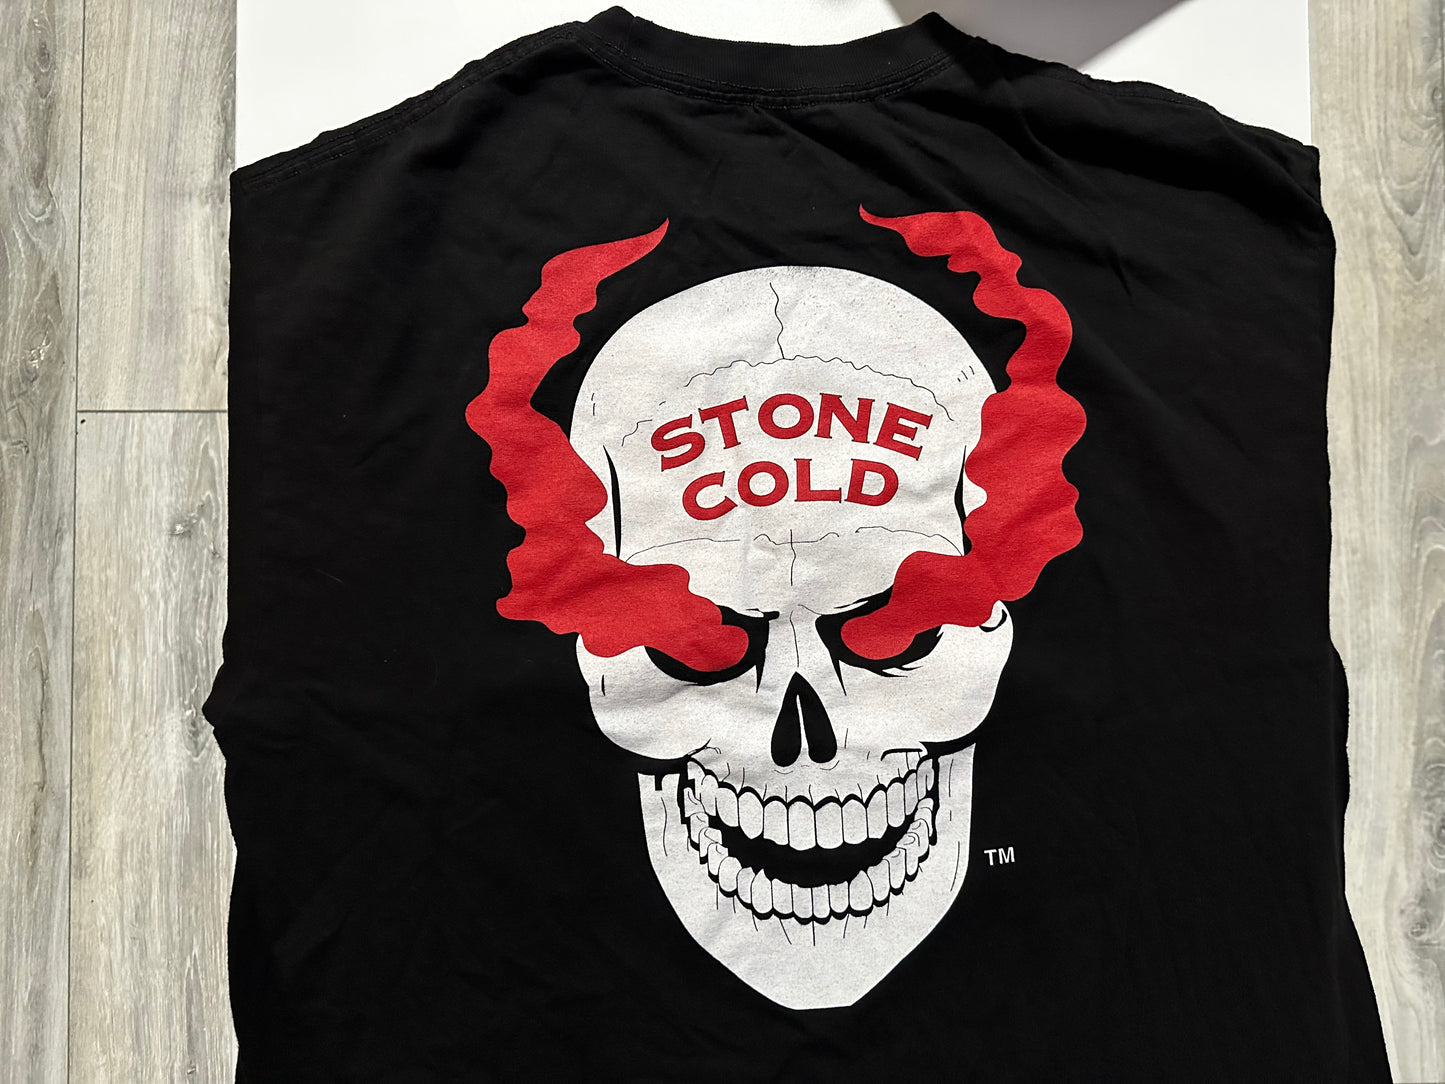 Stone Cold Steve Austin “Raw 3:16”